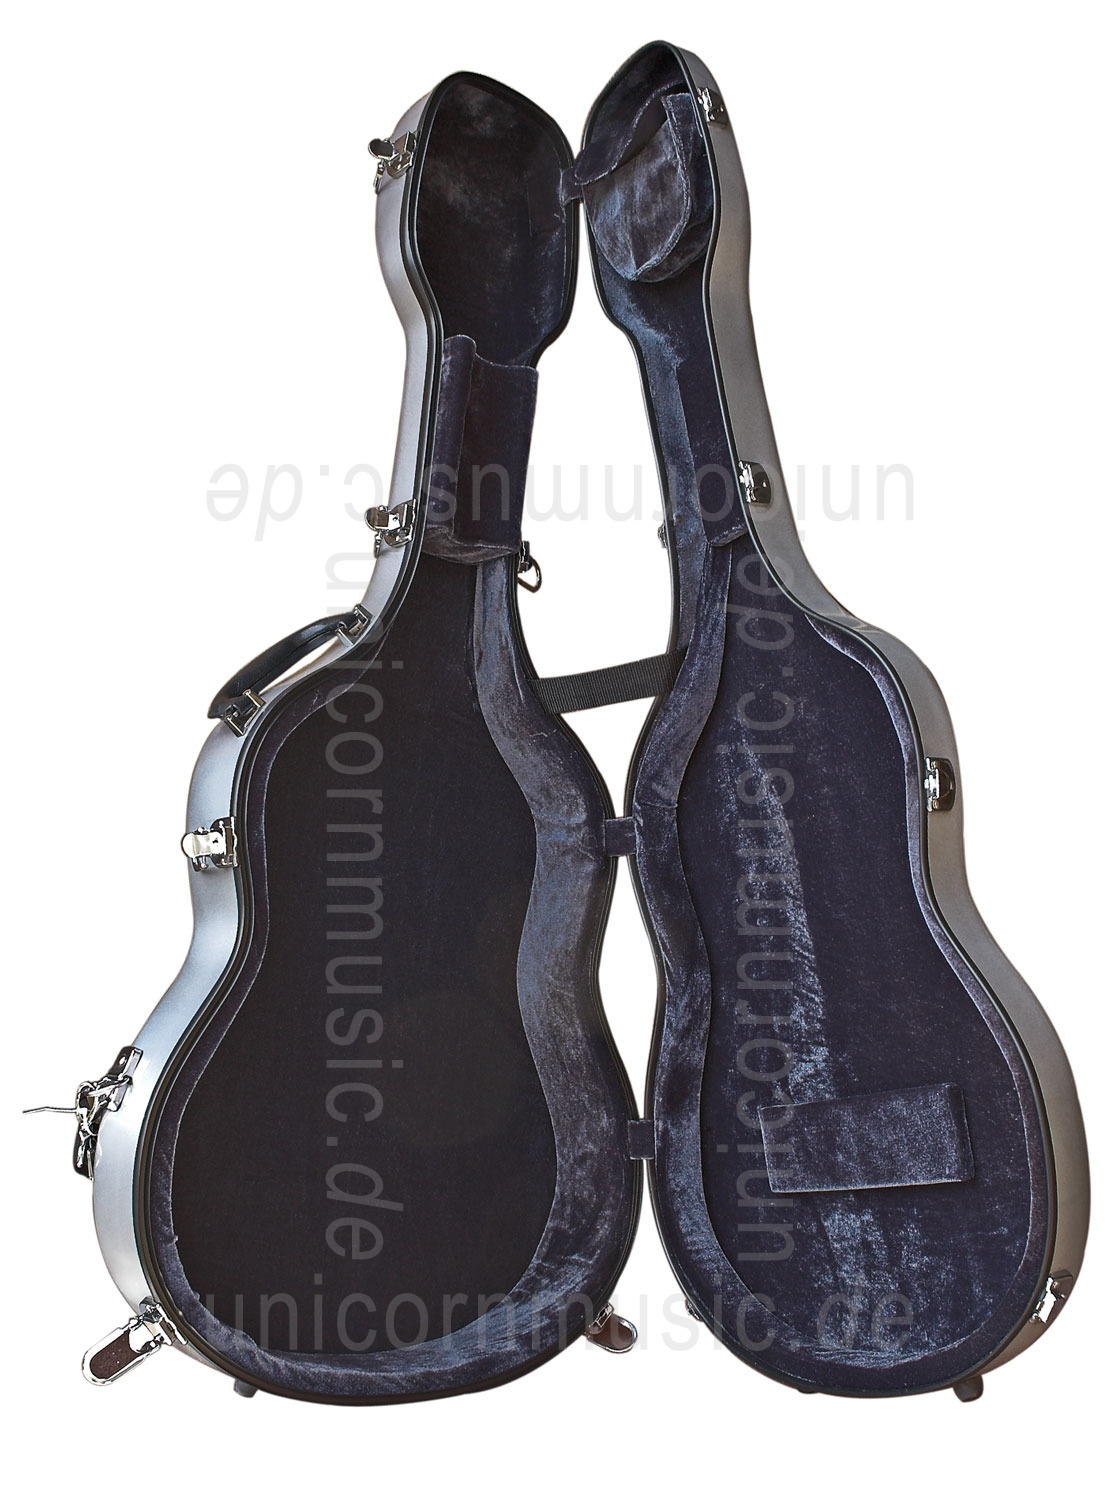 to article description / price Spanish Classical Guitar HERMANOS SANCHIS LOPEZ Model EXTRA CONCIERTO CAVIUNA - all solid - spruce top + case